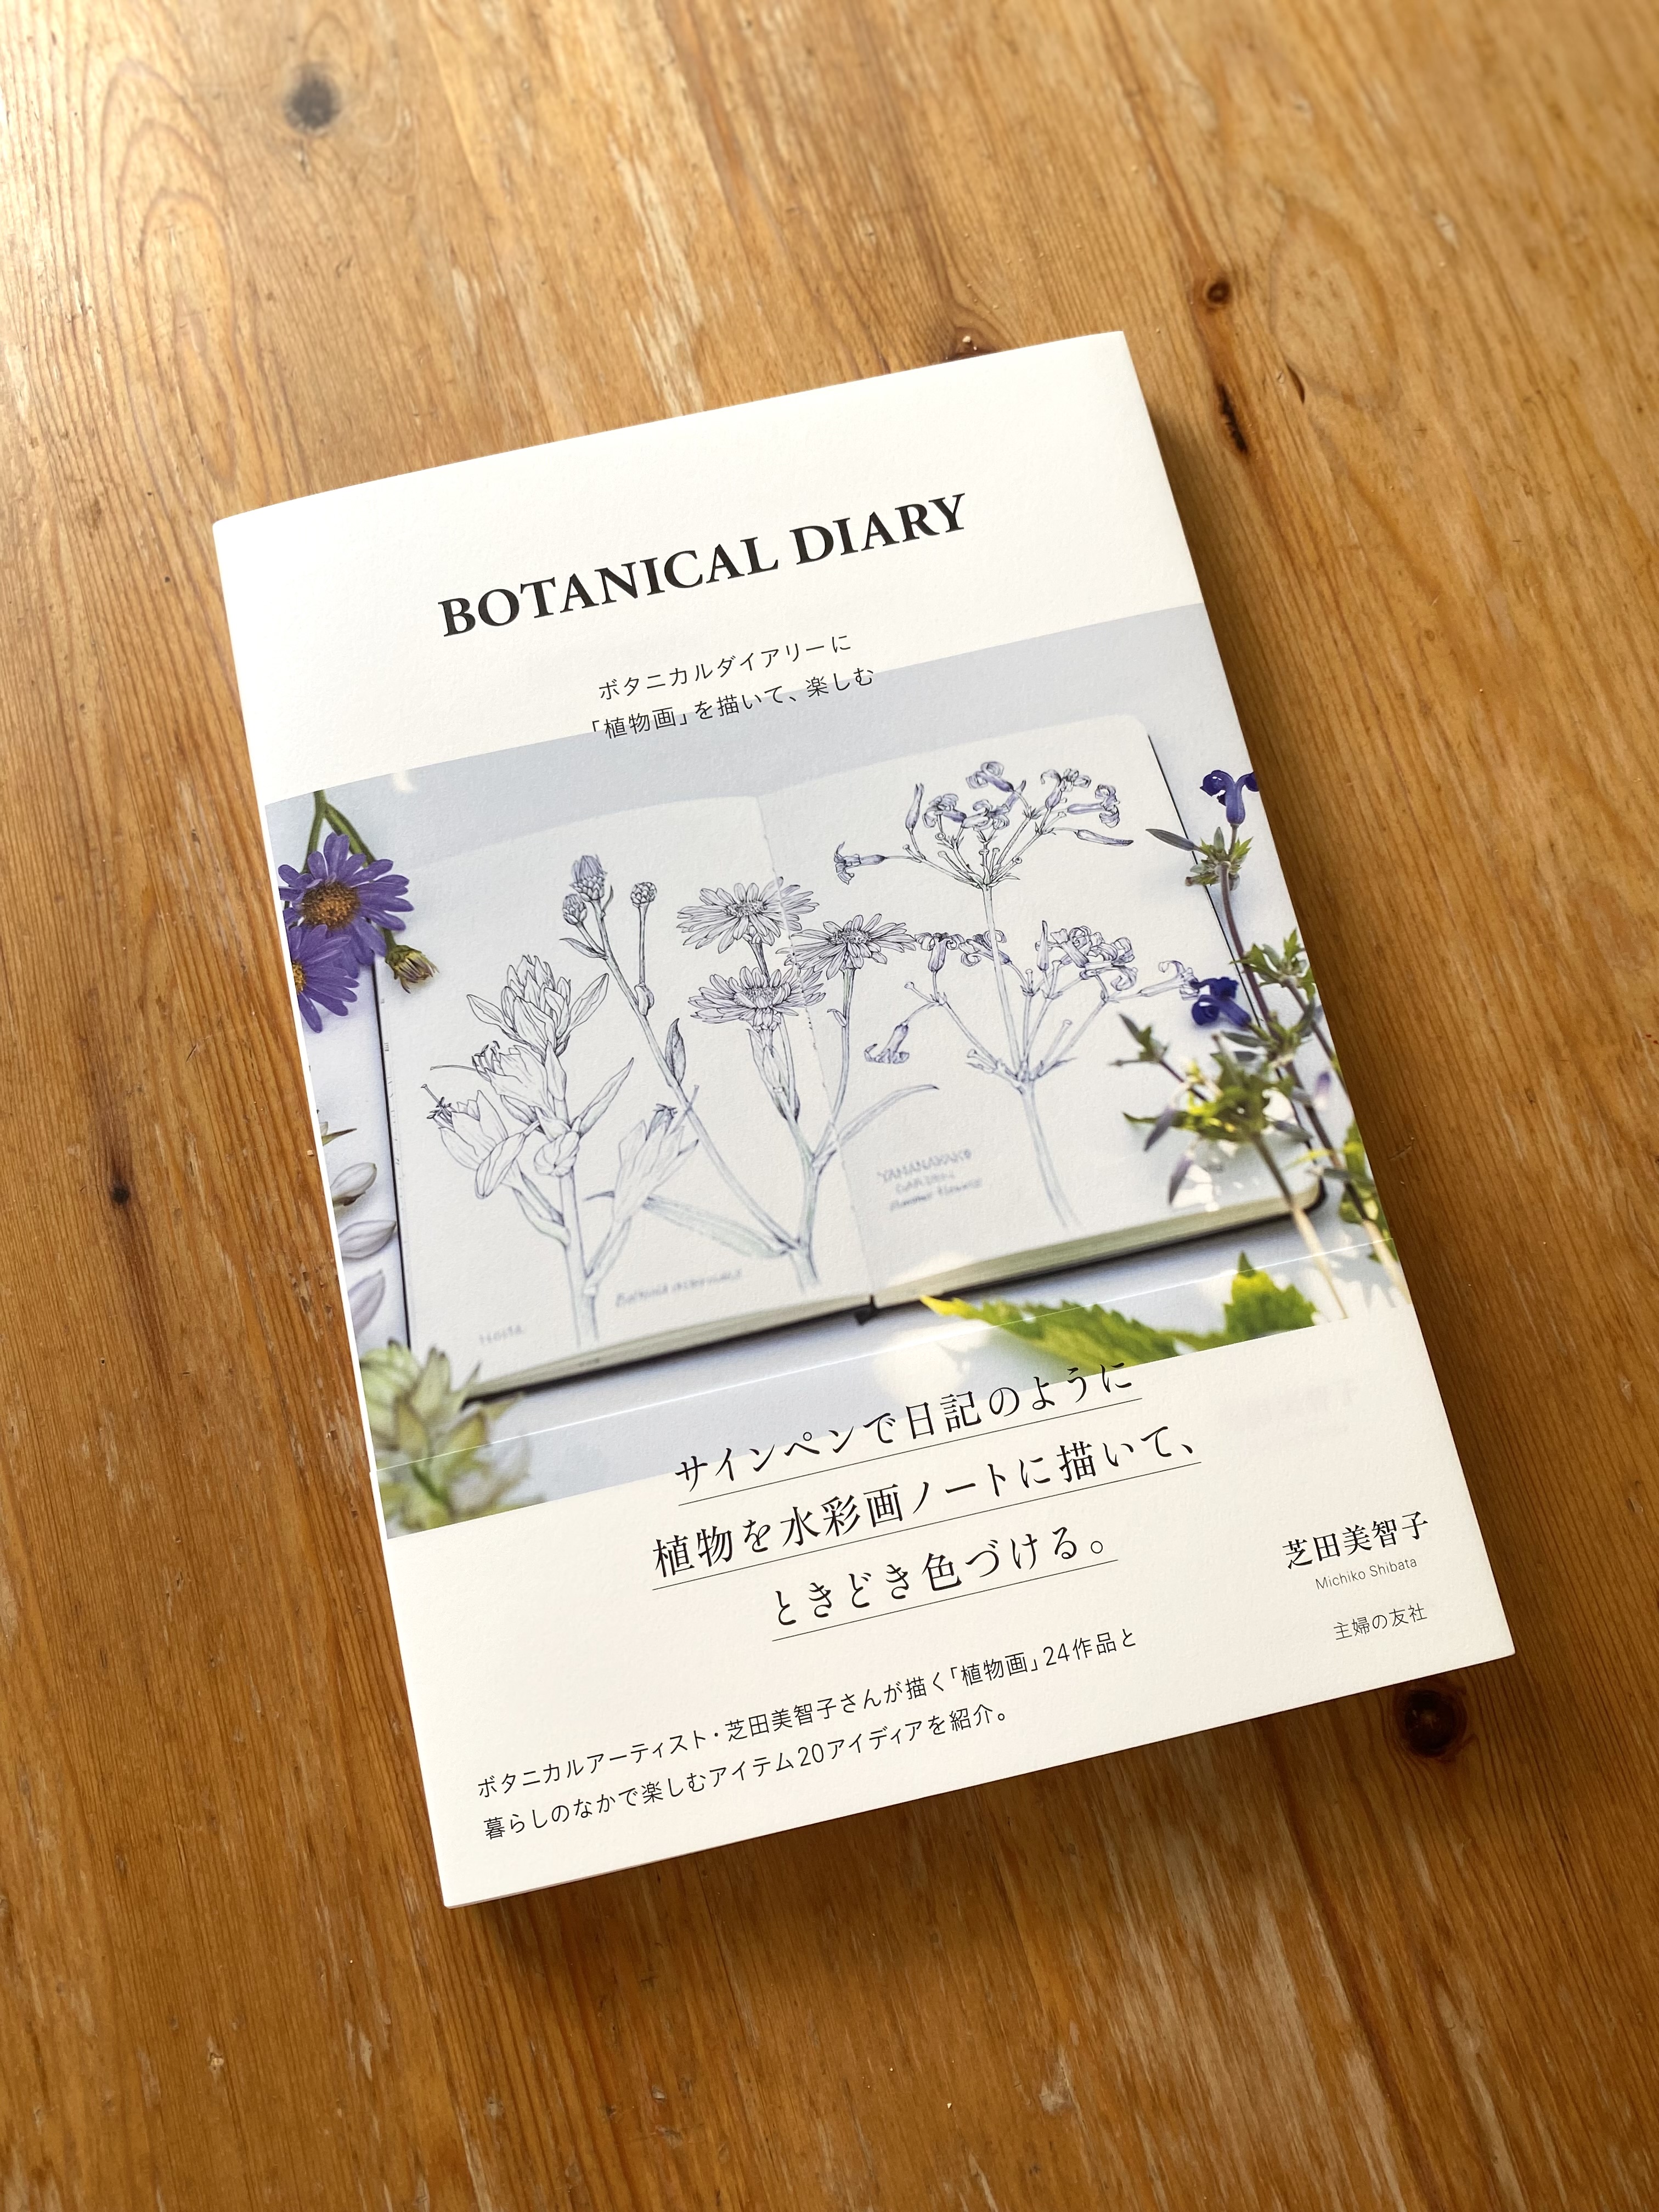 「BOTANICAL DIARY」芝田美智子さんの著書ご予約開始